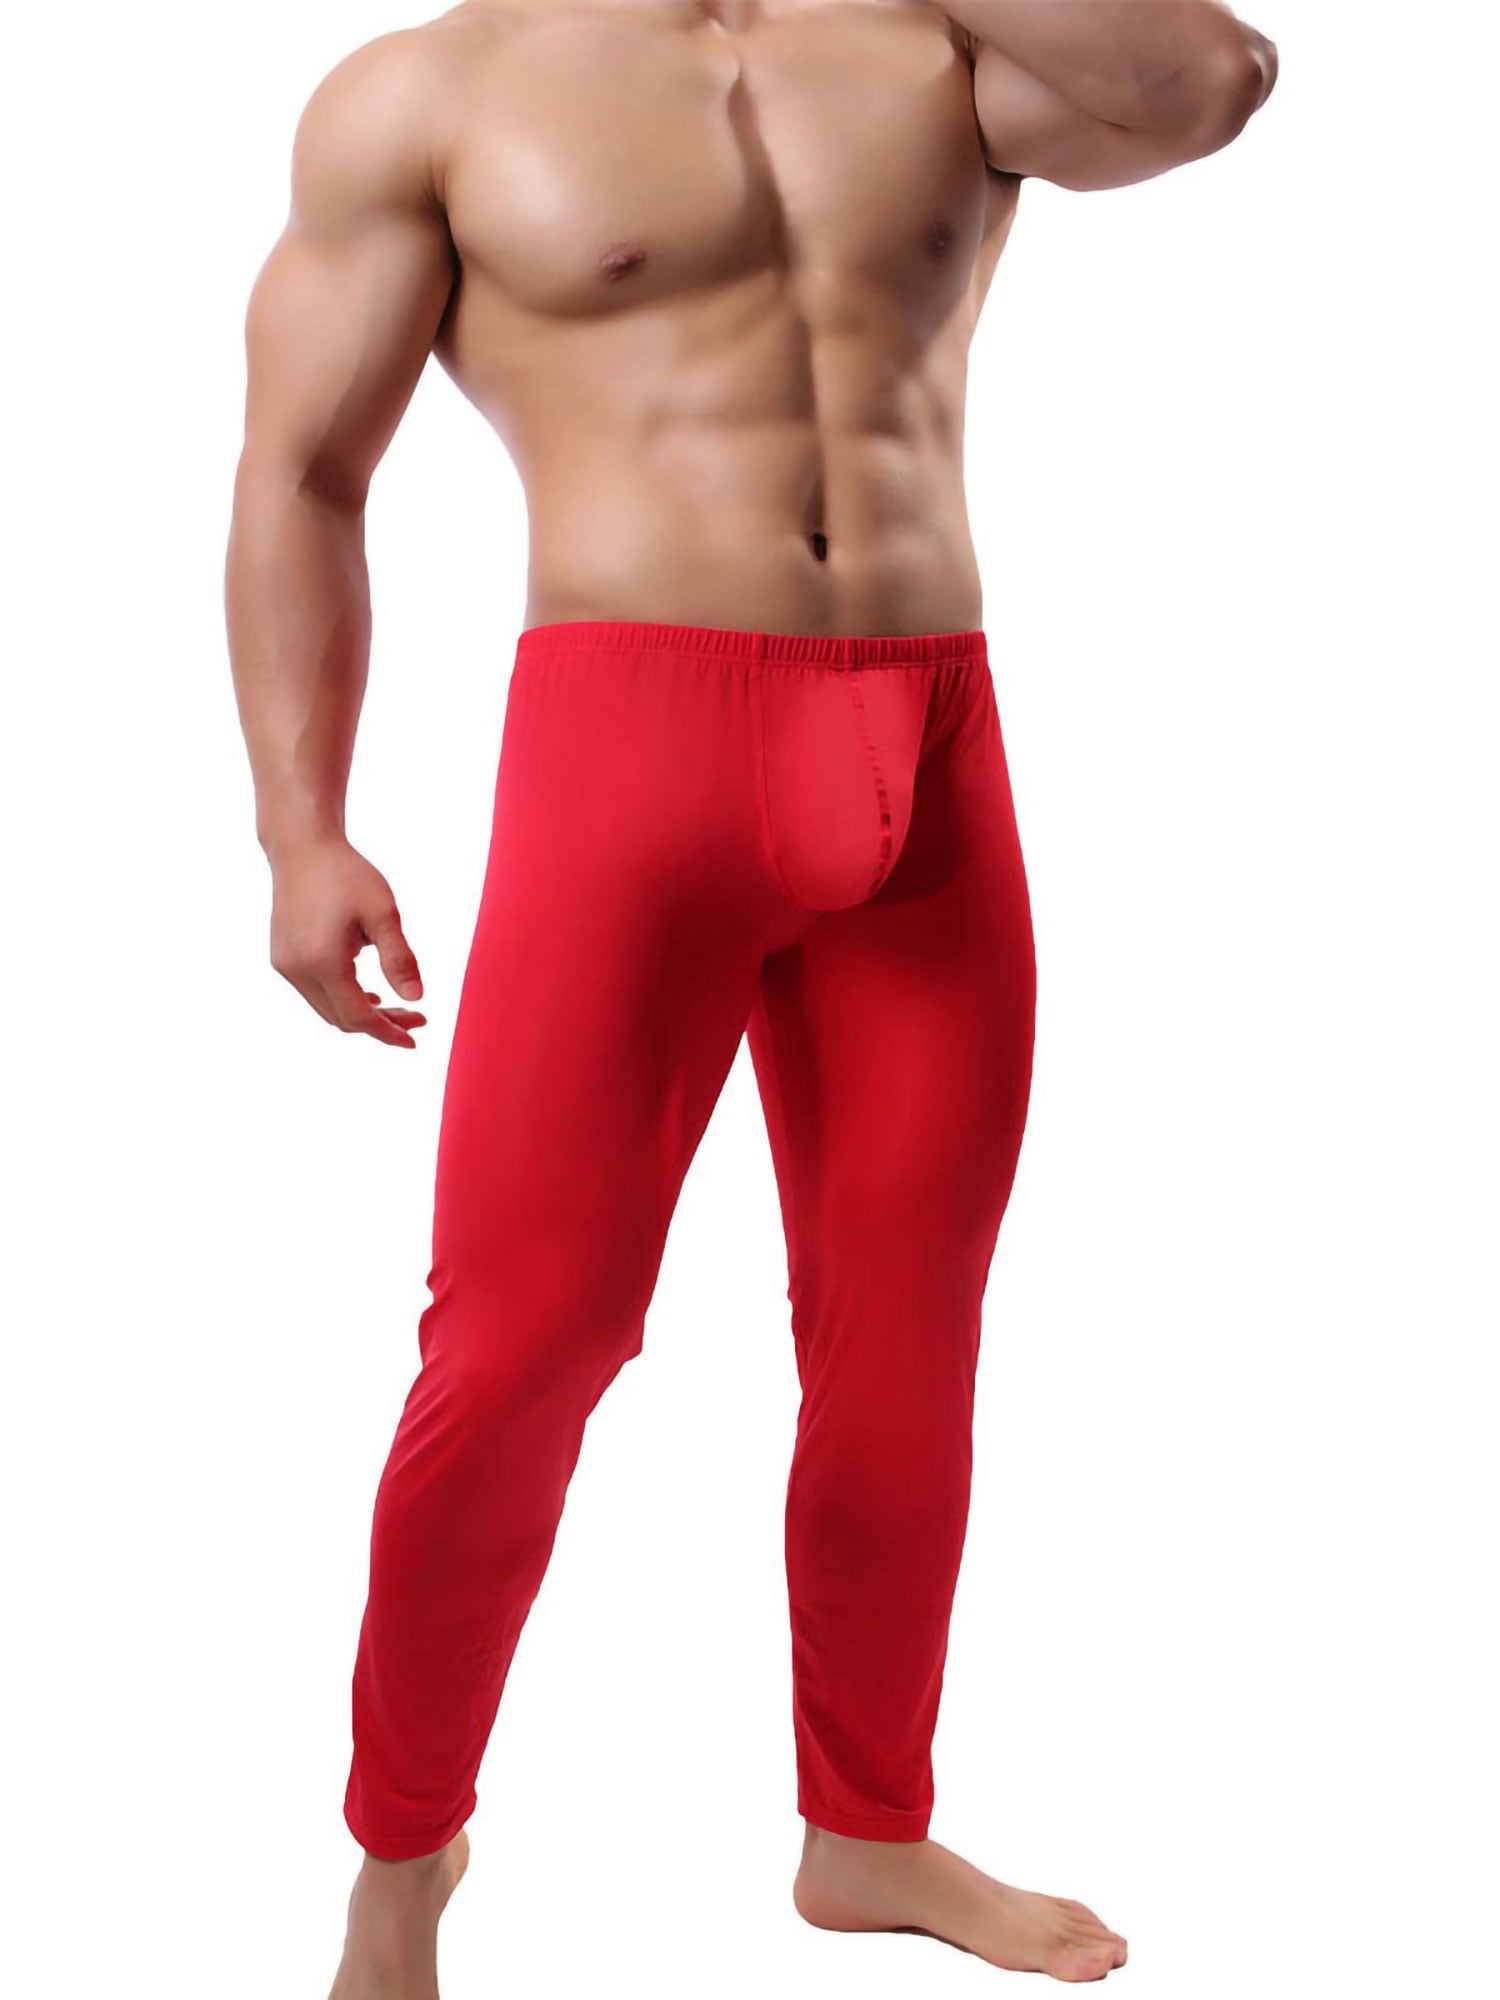 Mens Compression Long Athletic Tight Underwear Pants Legging Sport Gym Training 